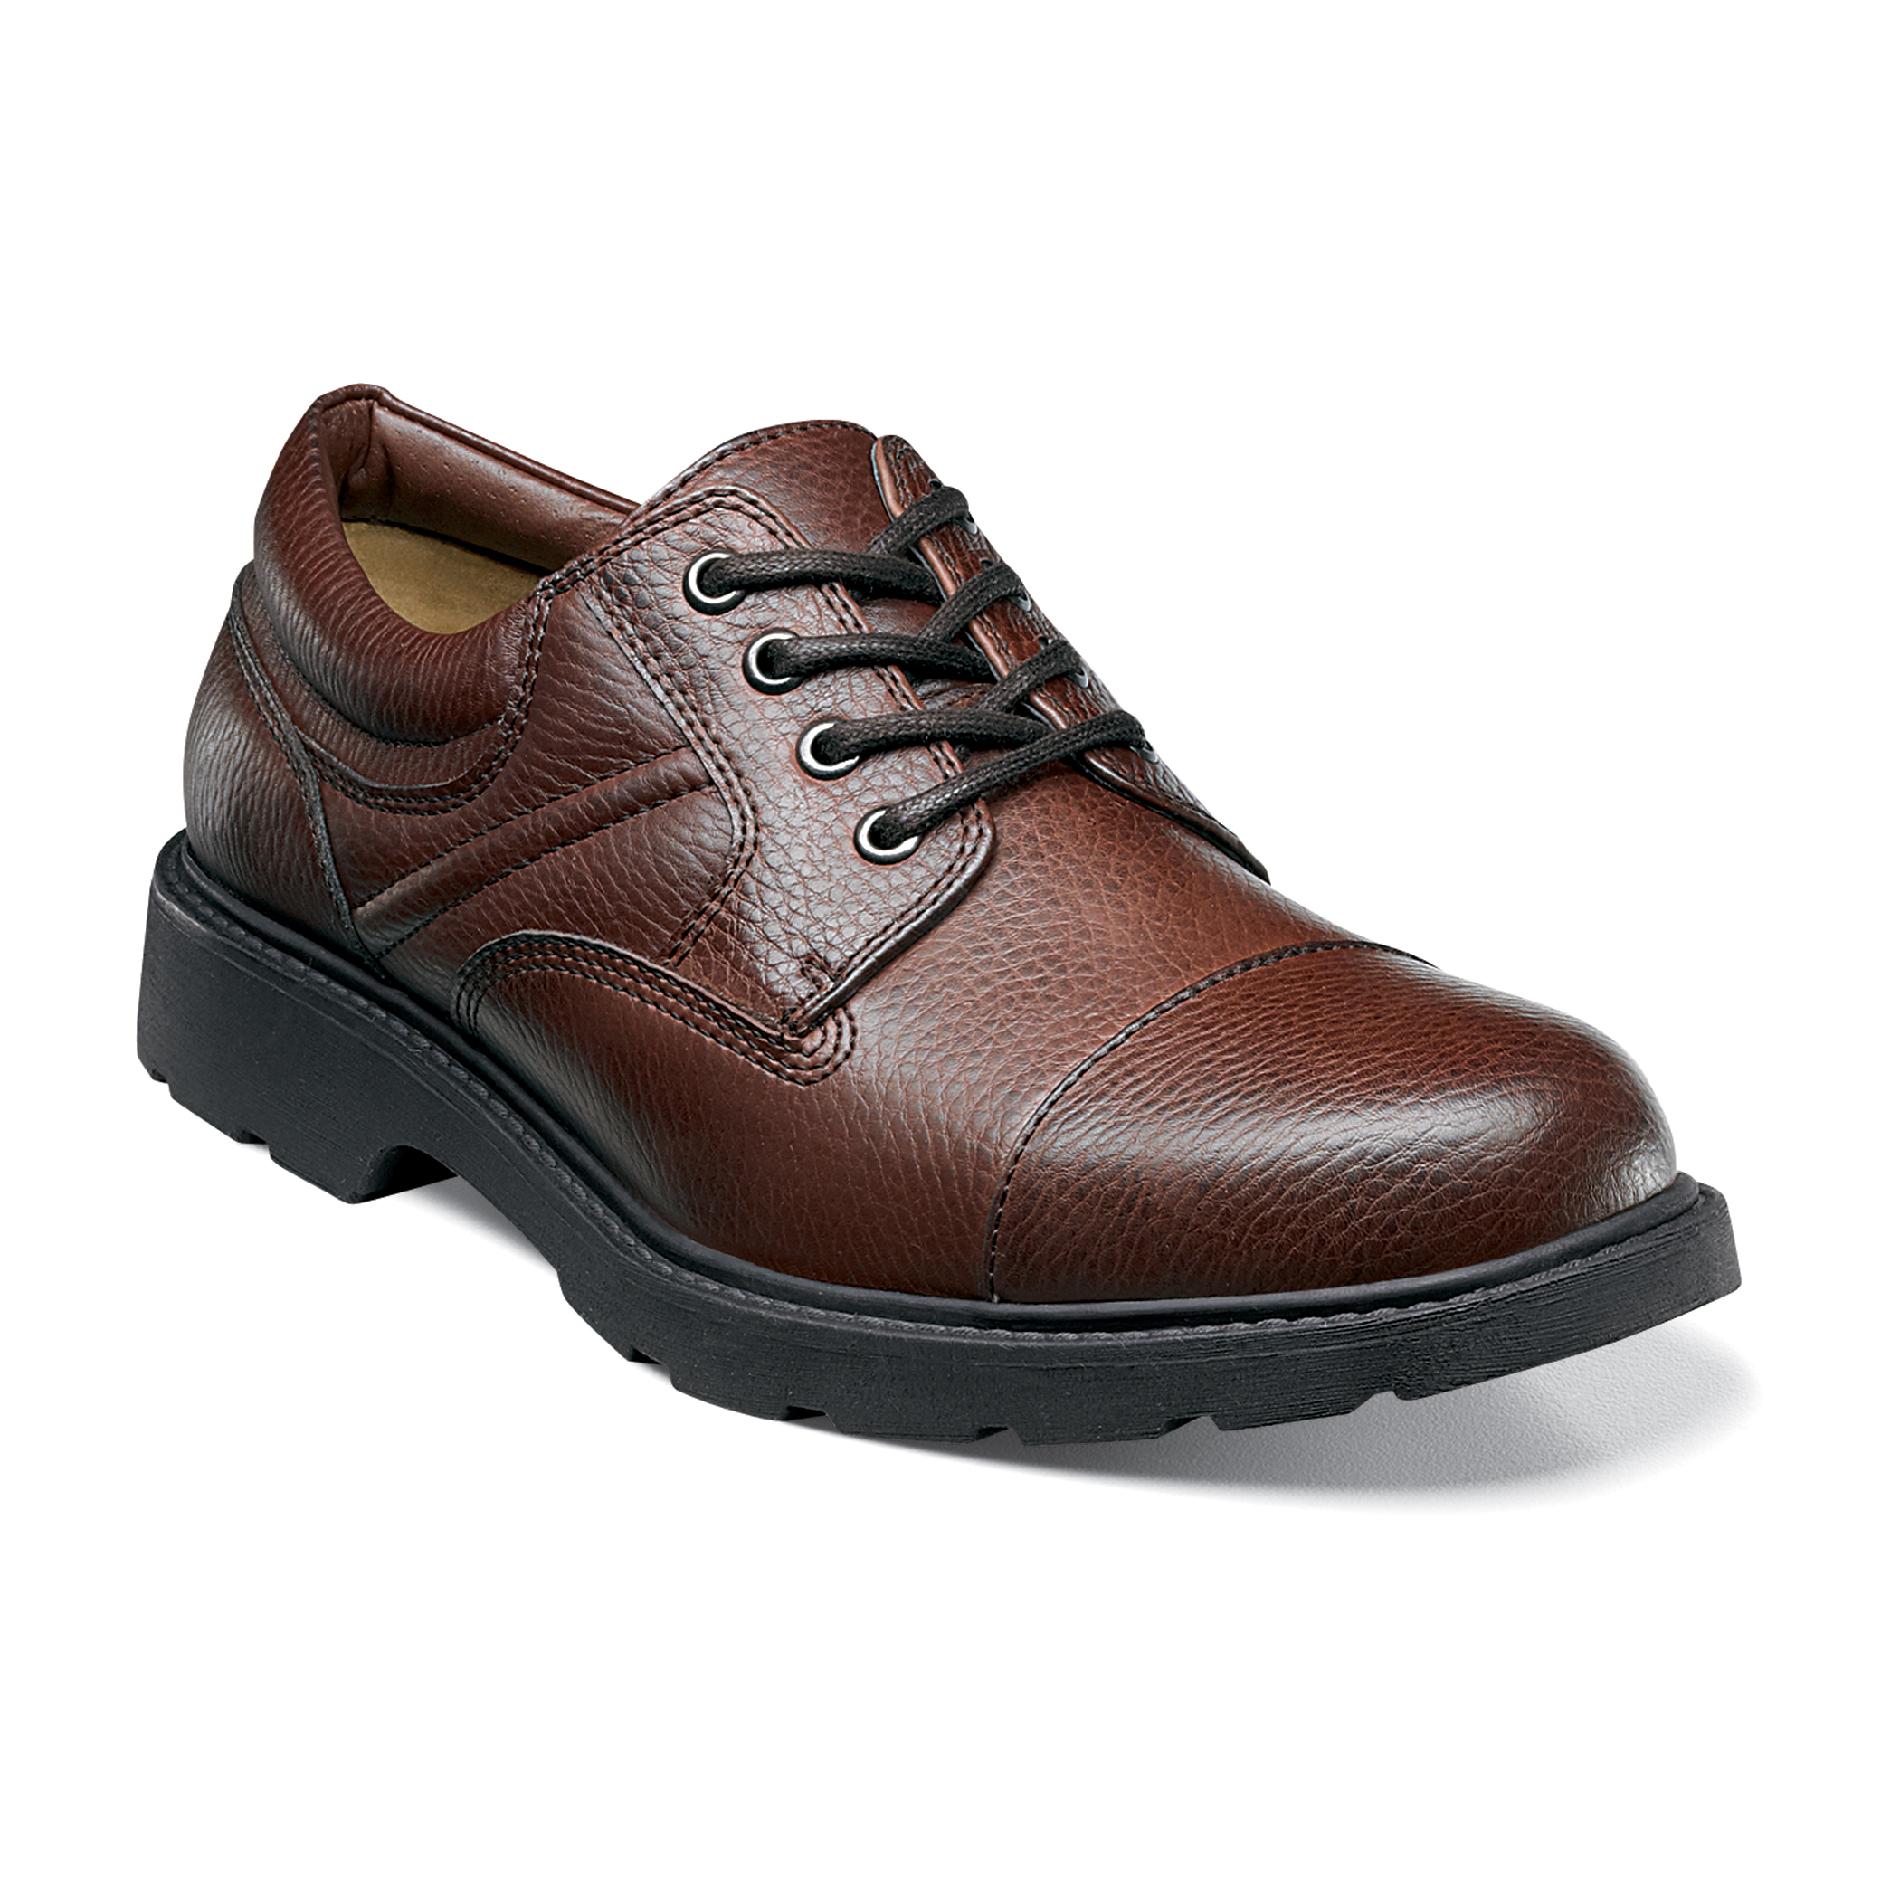 Nunn Bush Men's Casual Shoe Glenwood Wide Avail - Brown